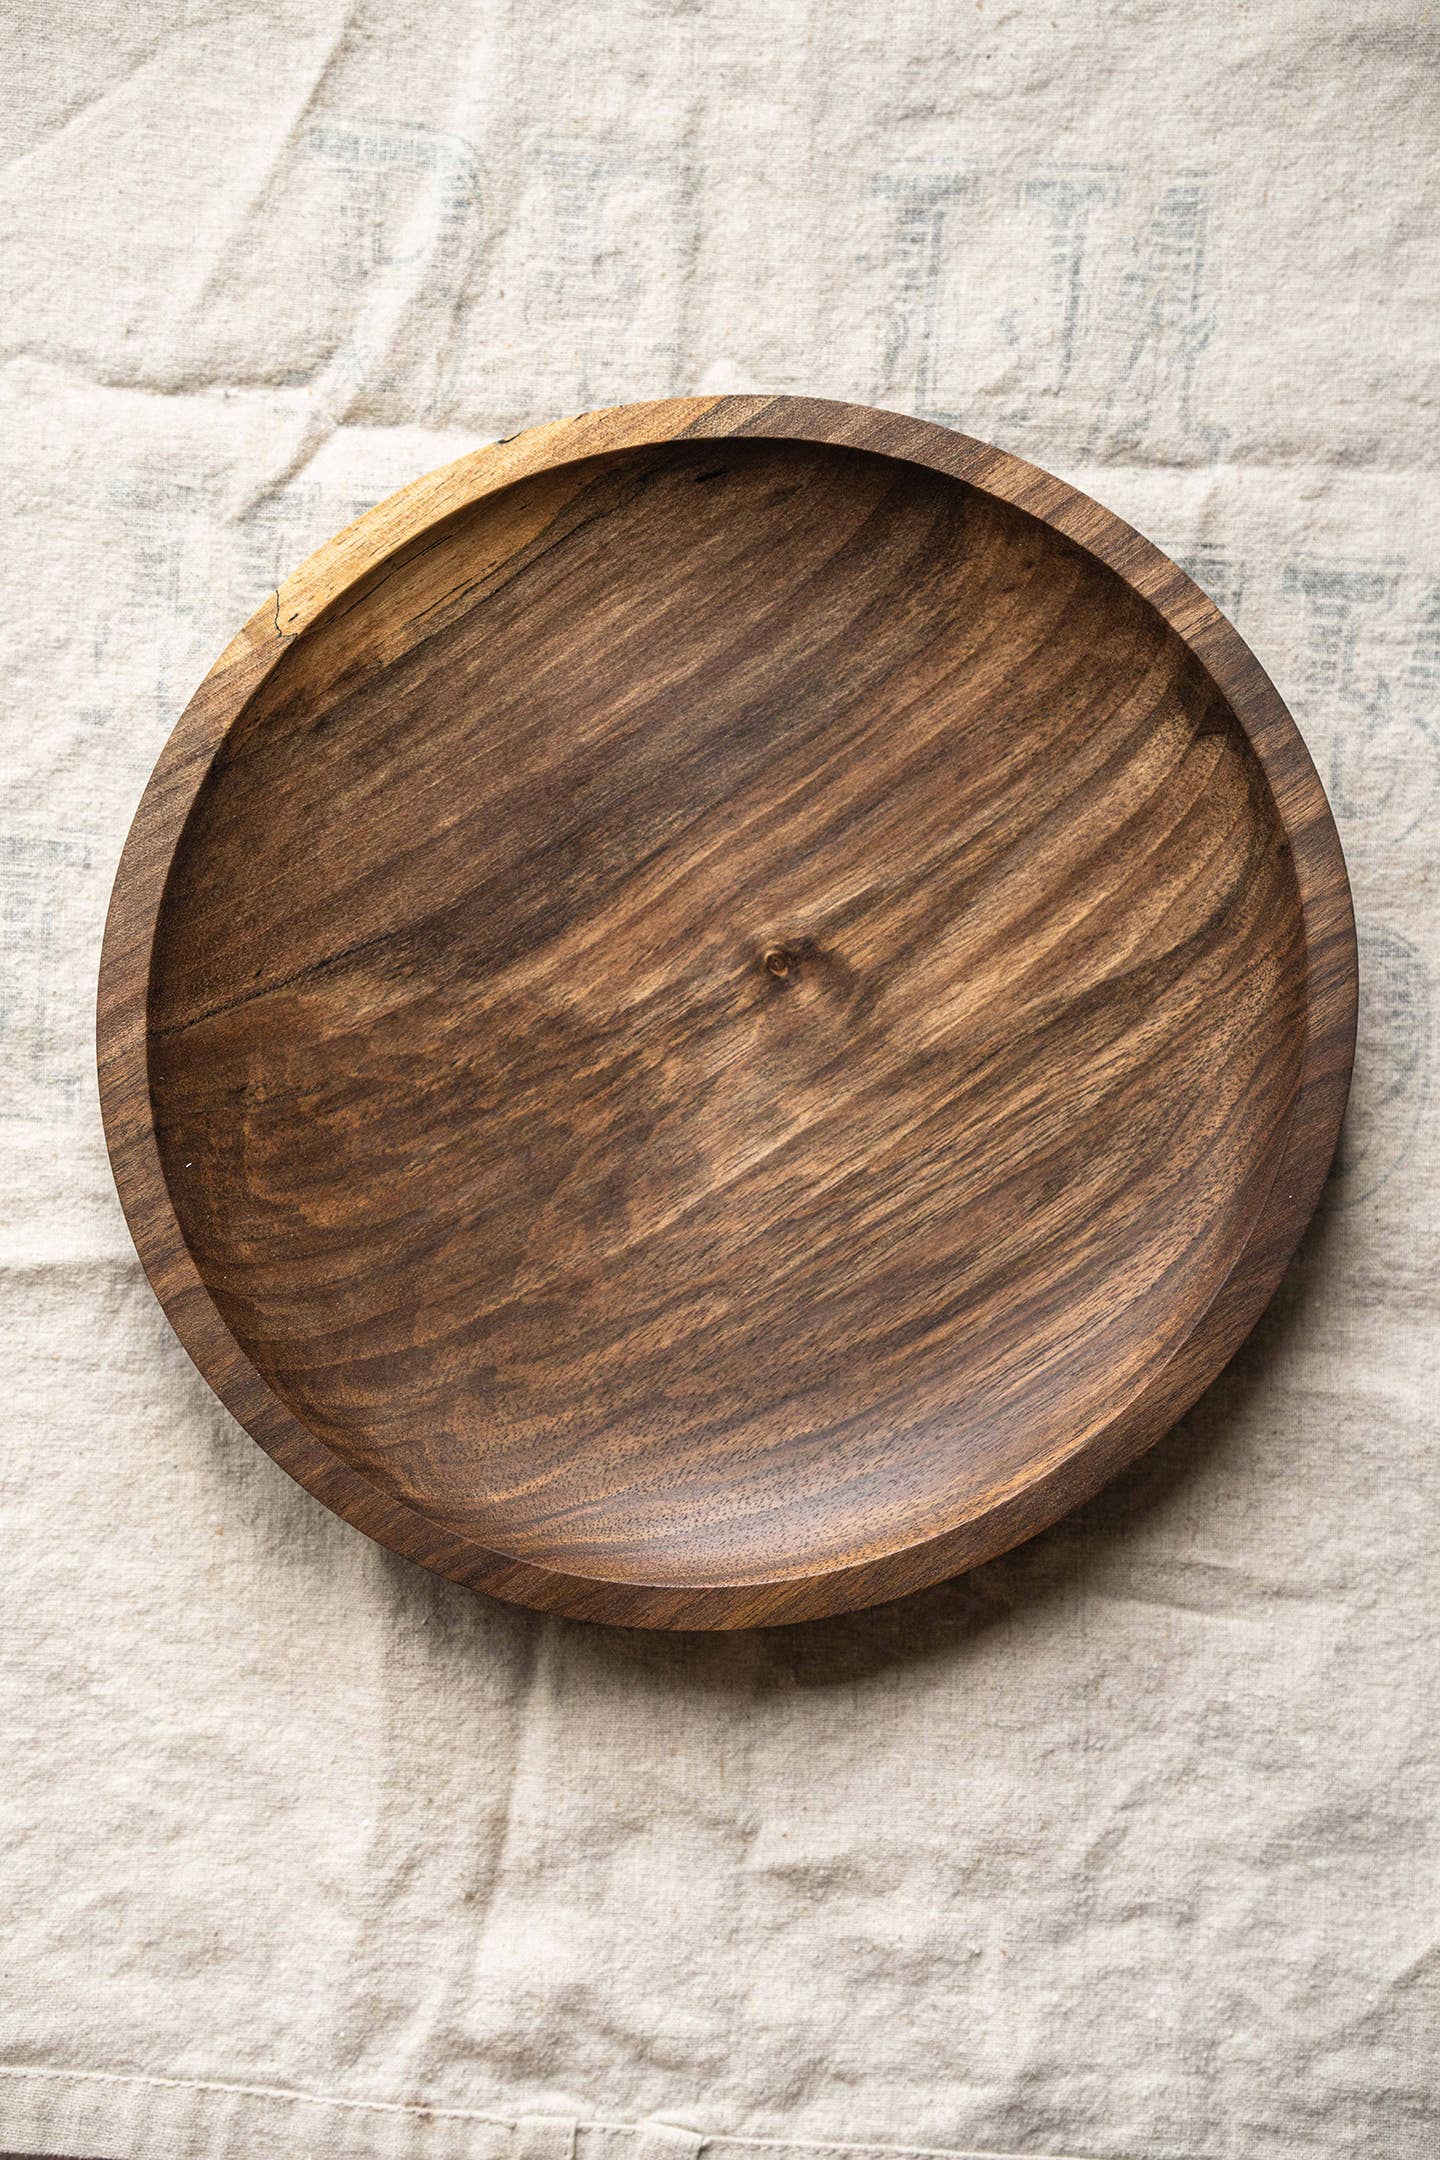 Ethical Trade Co Tabletop Dinner Plate Hand-Carved Ukrainian Walnut Wood Dinner Plates